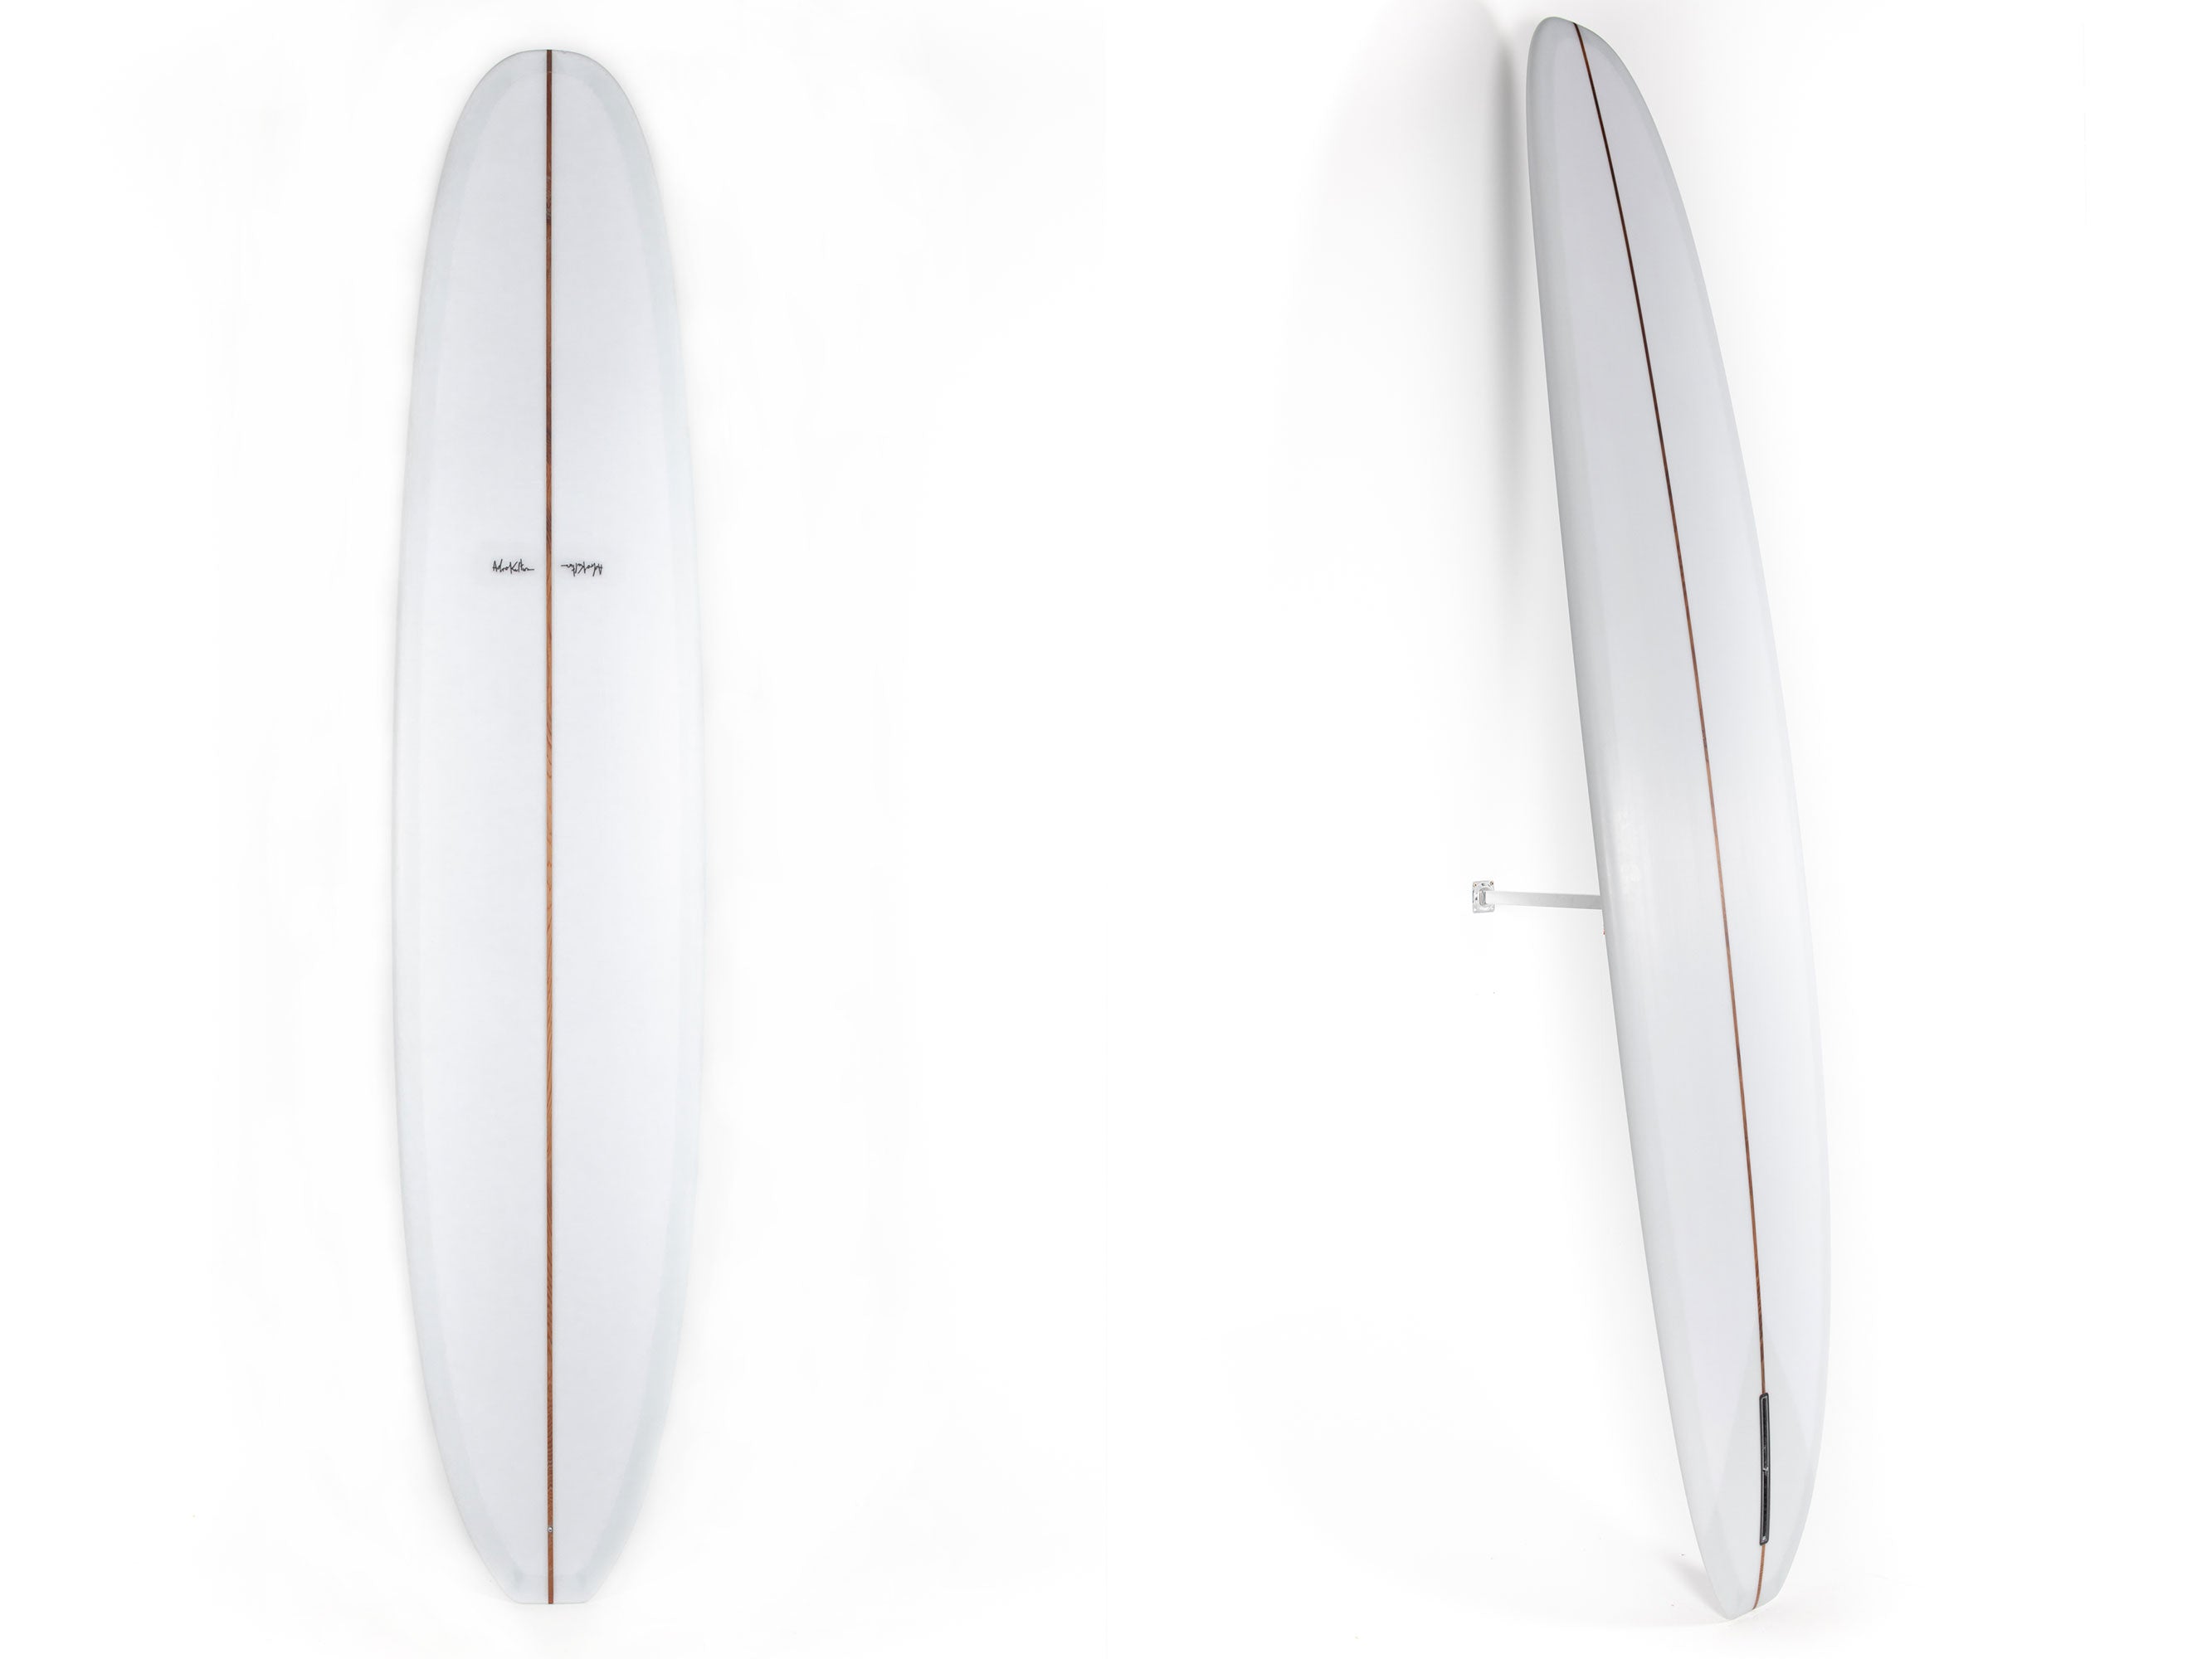 Pukas Surf Shop - Adrokultura Surfboards